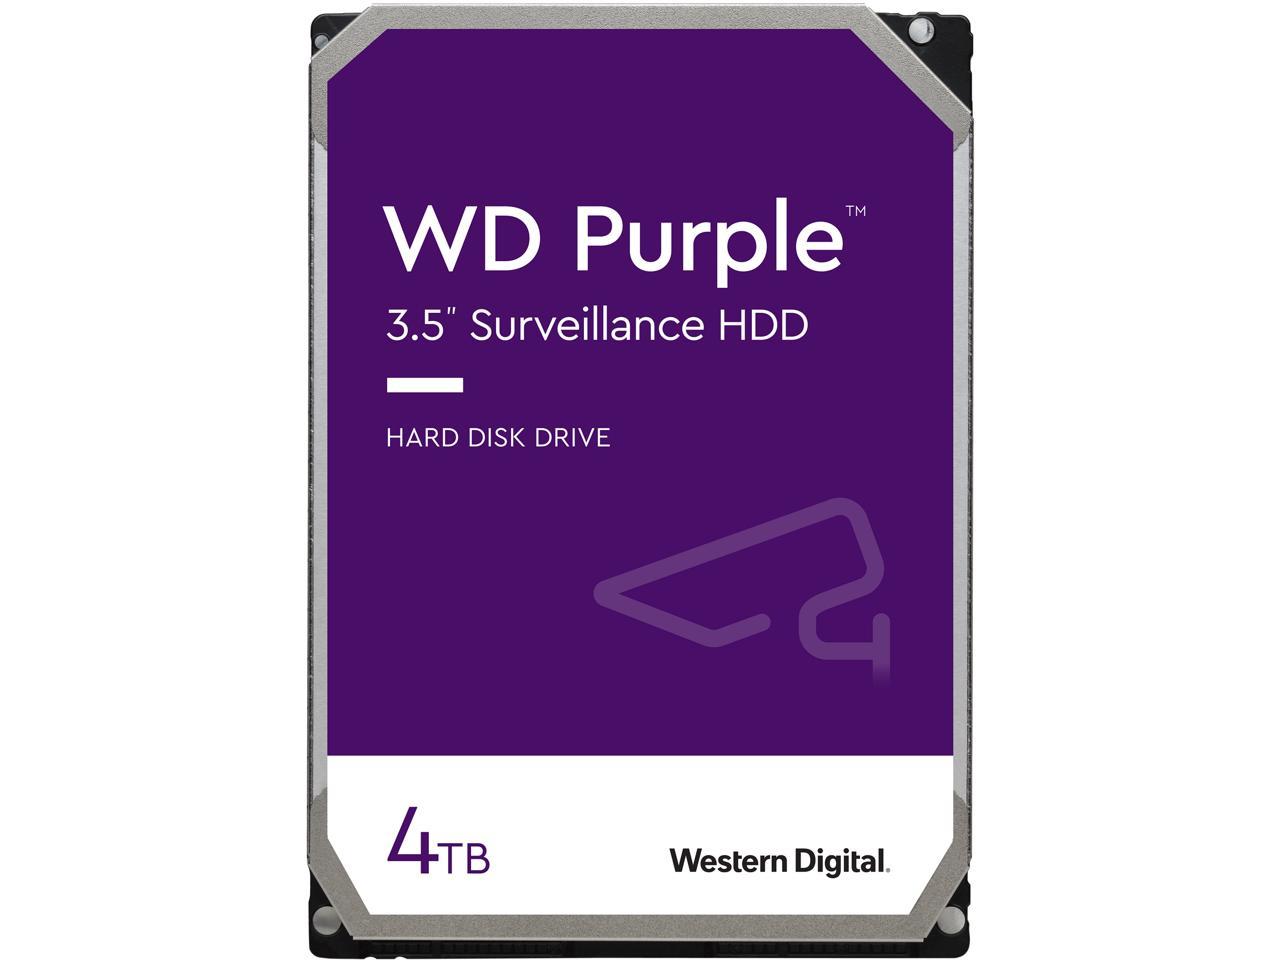 4TB WD Purple 3.5" 5400RPM SATA 6Gb/s Surveillance Internal Hard Drive $89 + Free Shipping at Newegg